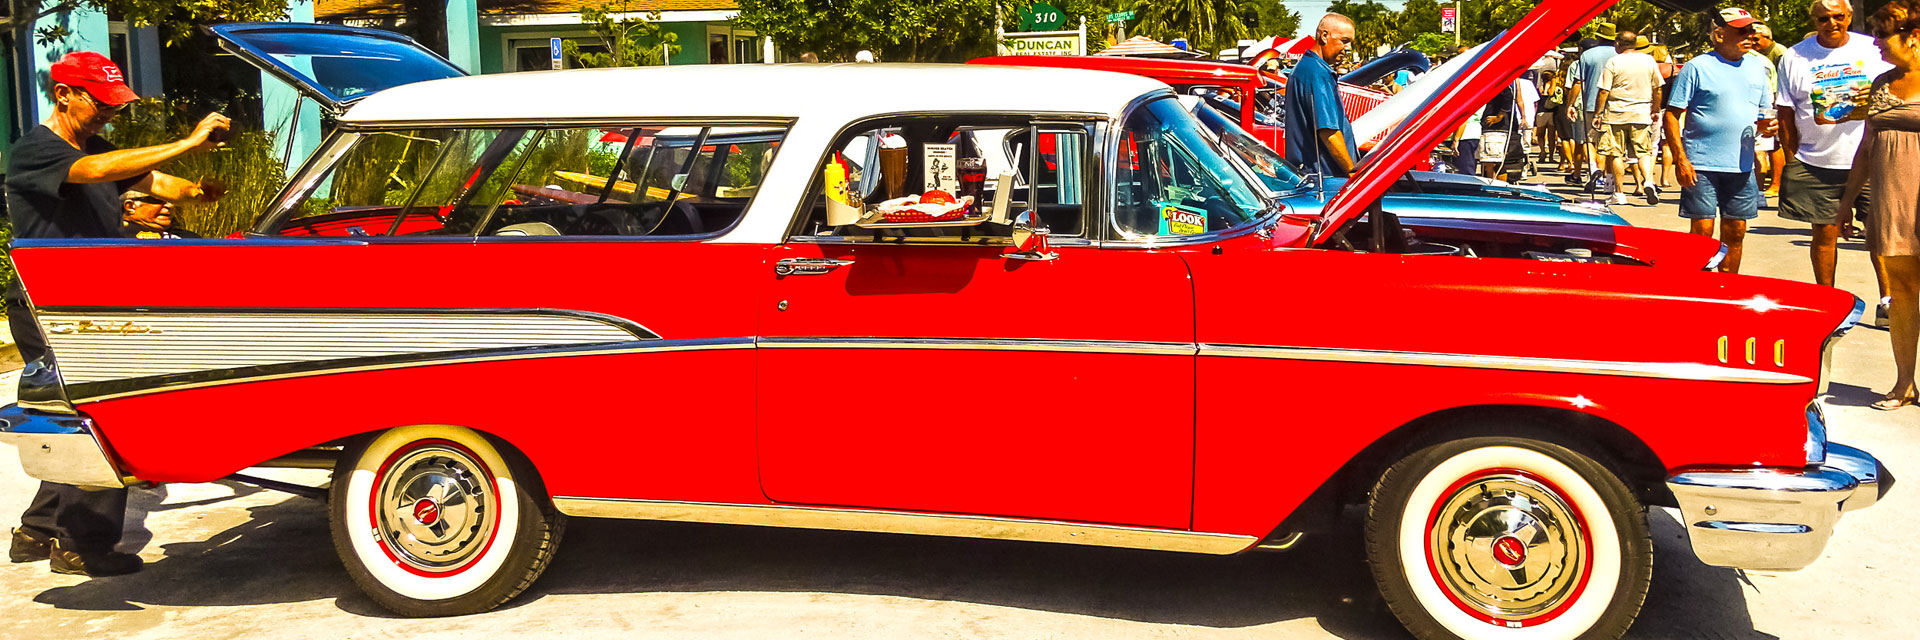 Red classic car.